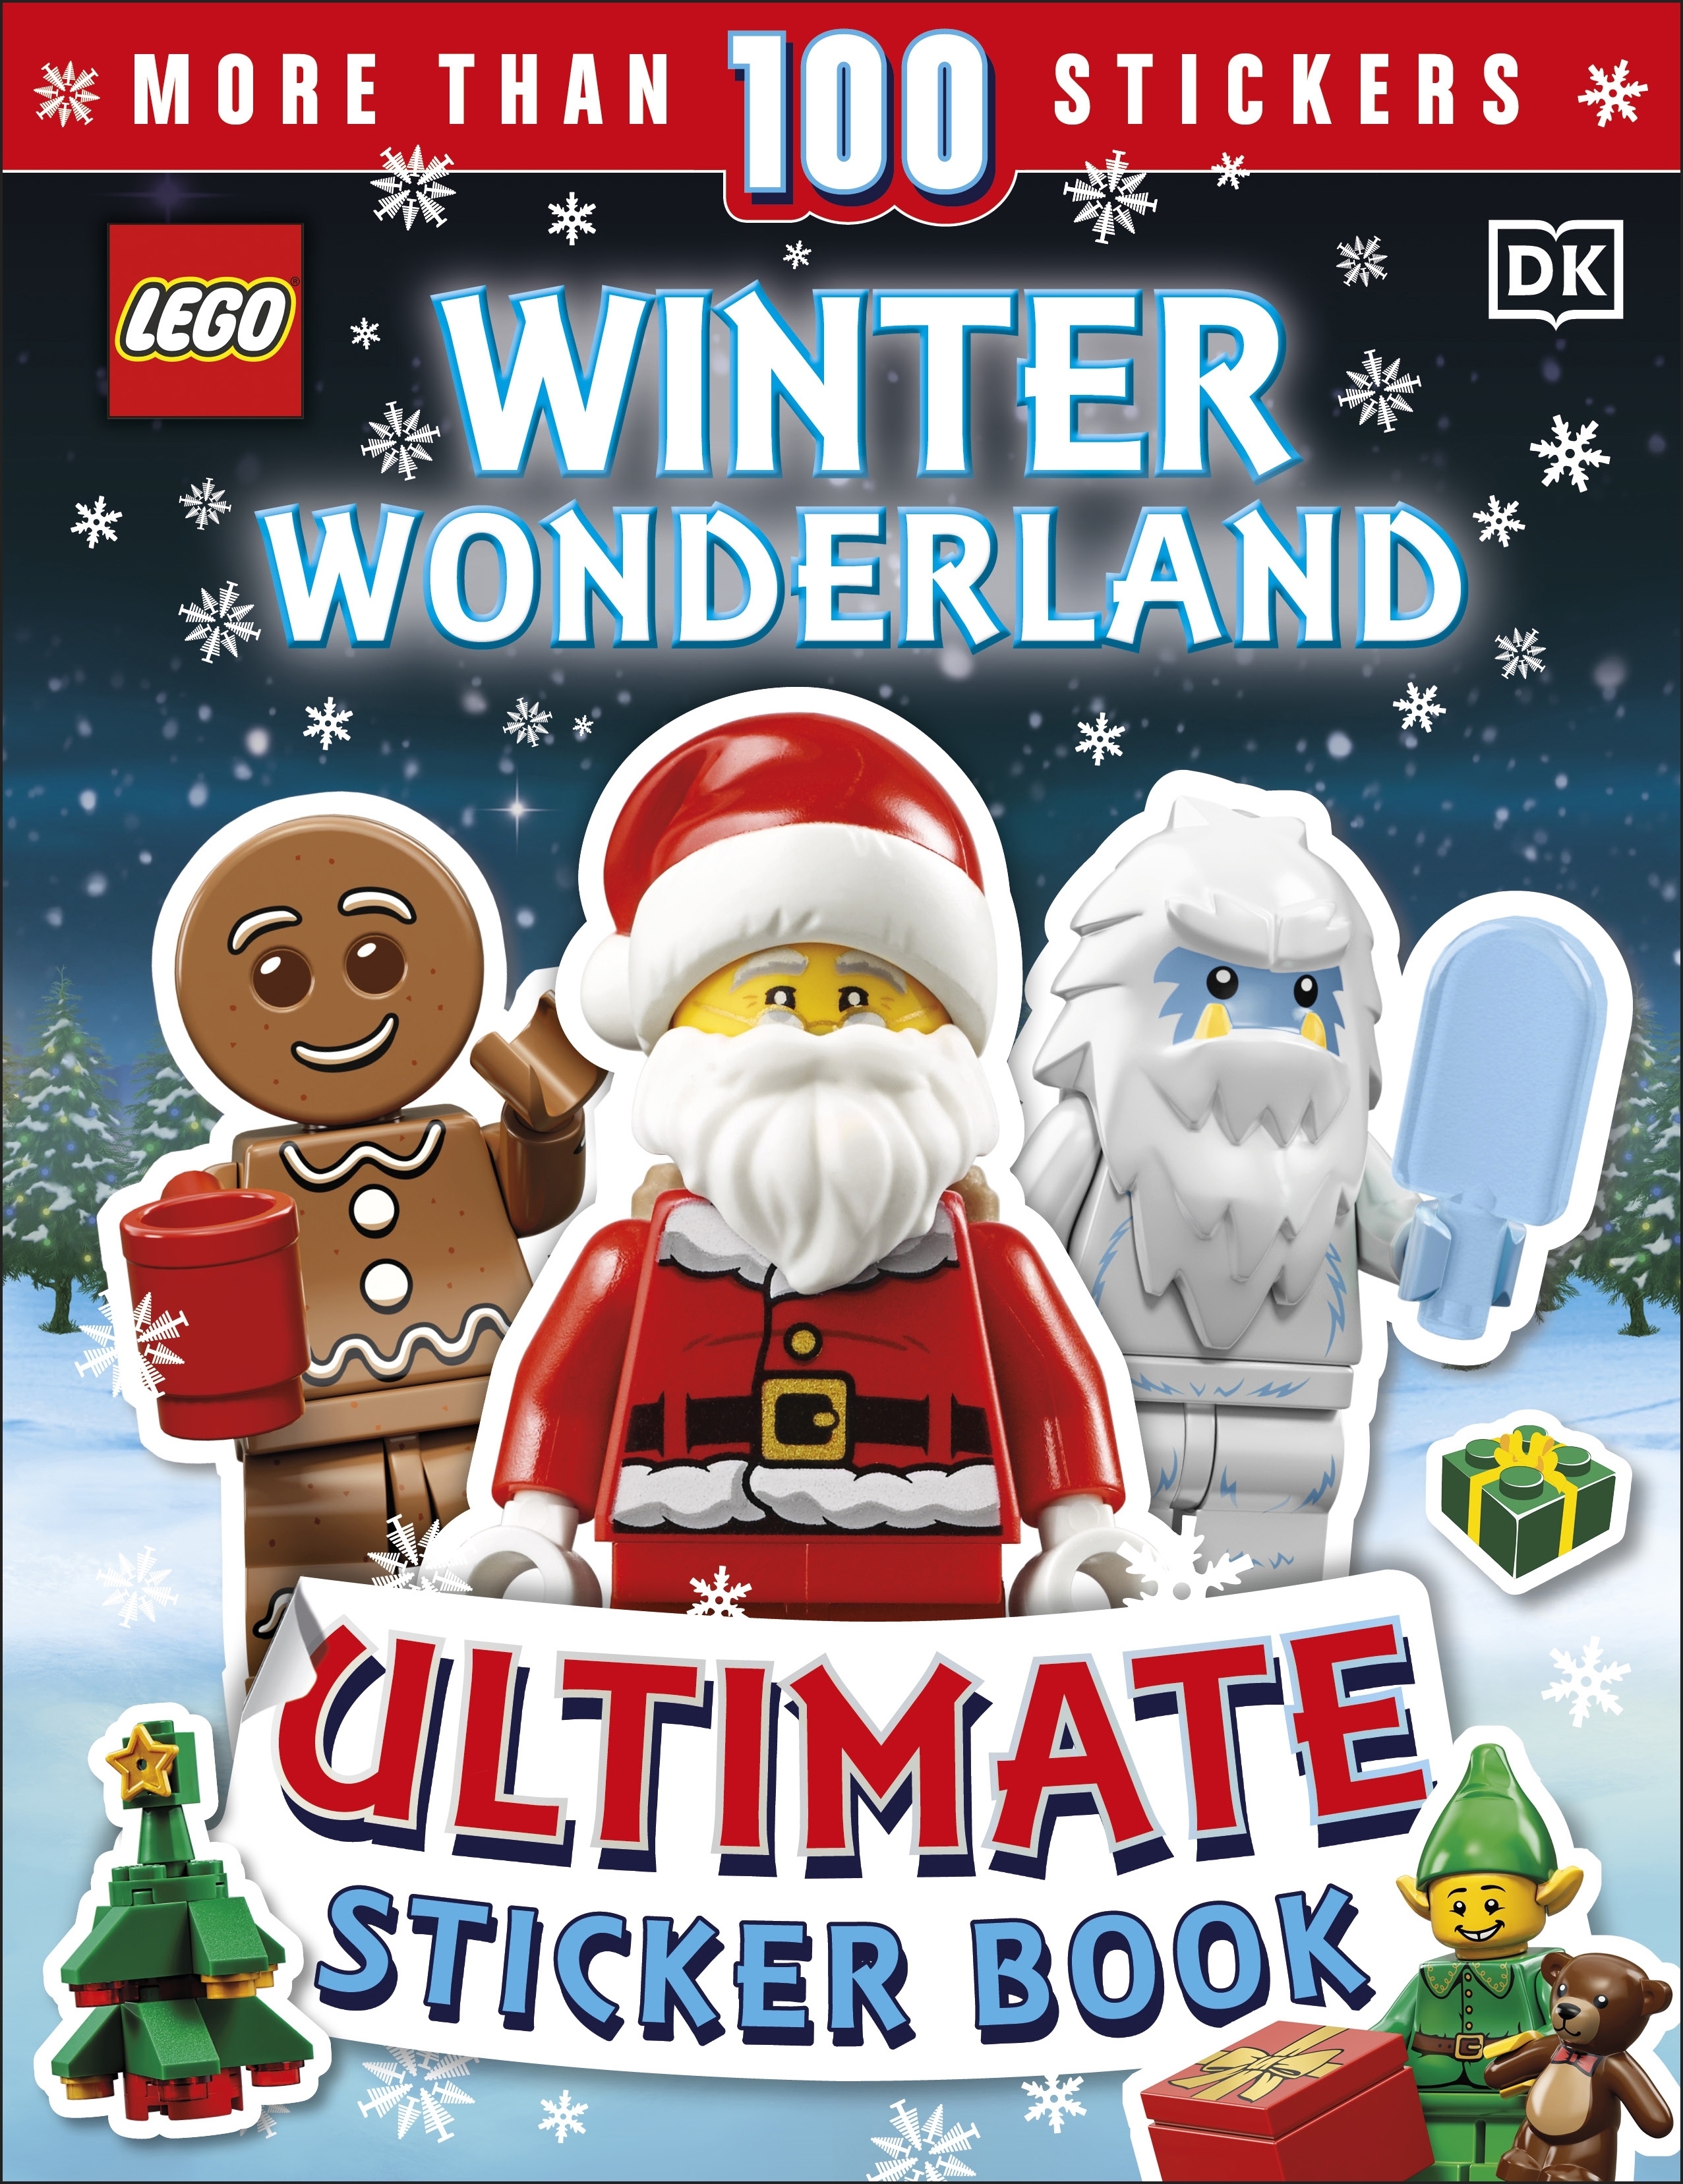 LEGO Winter Wonderland Ultimate Sticker Book by DK - Penguin Books New  Zealand